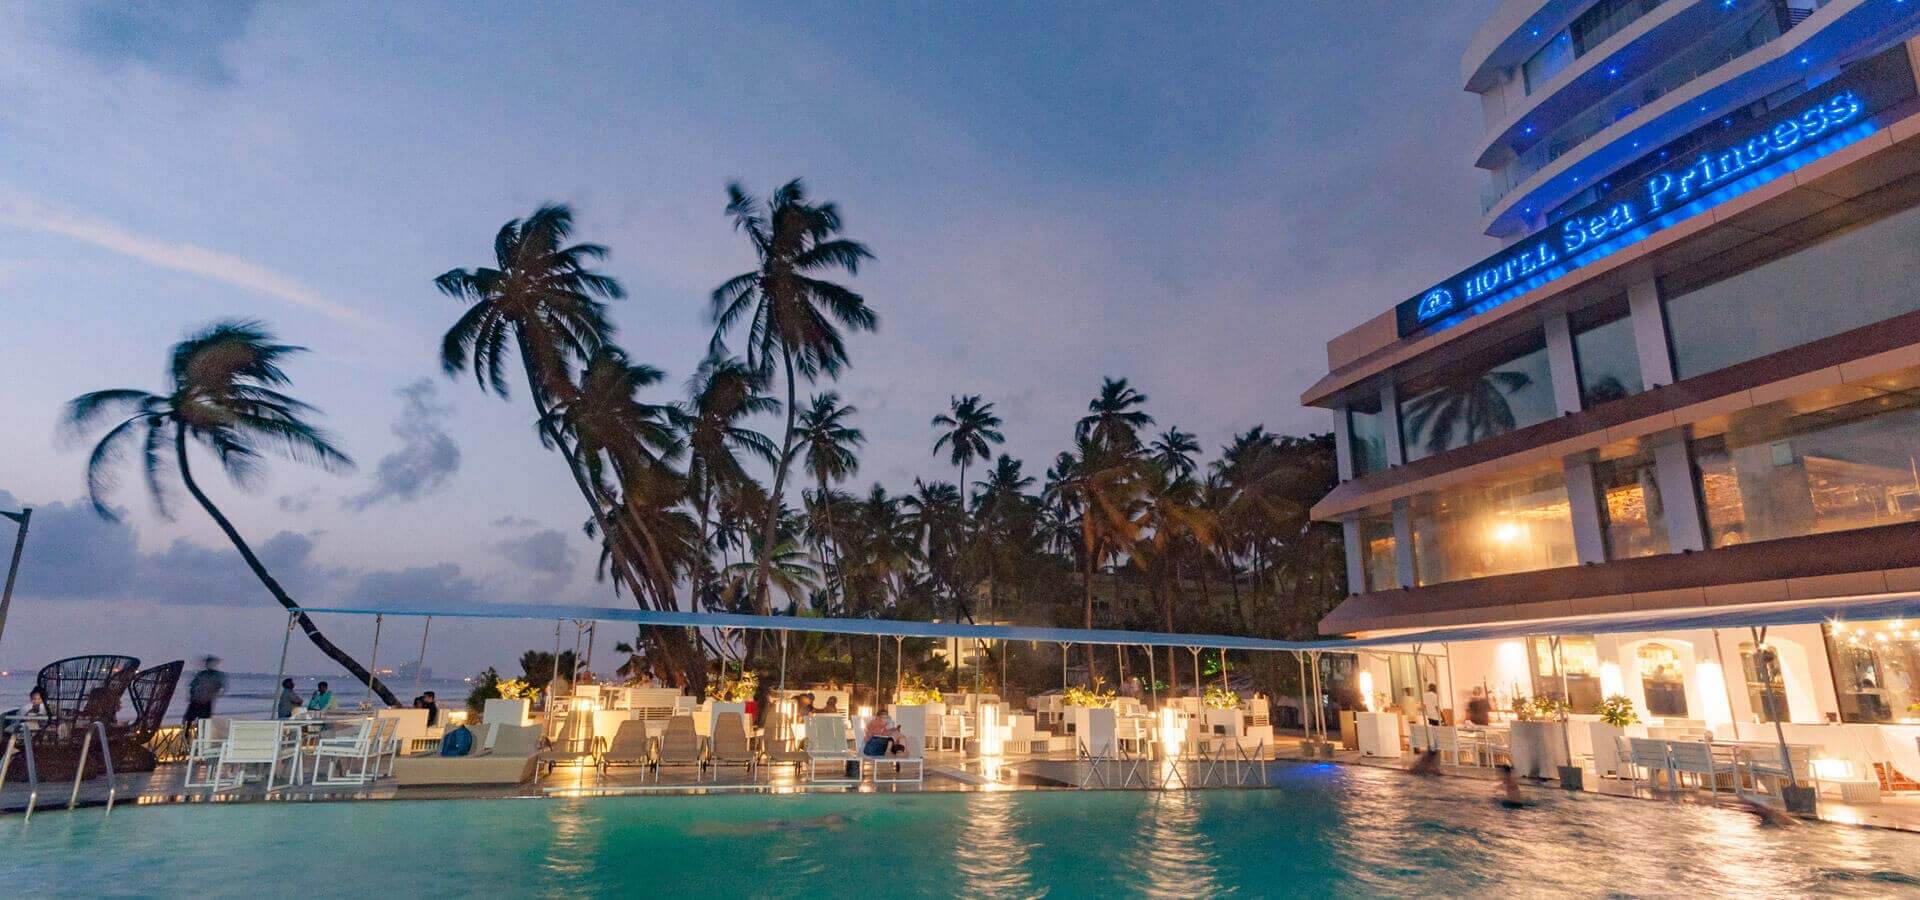 Hotel Sea Princess – A leading 5 star Hotel near Juhu Beach, Mumbai